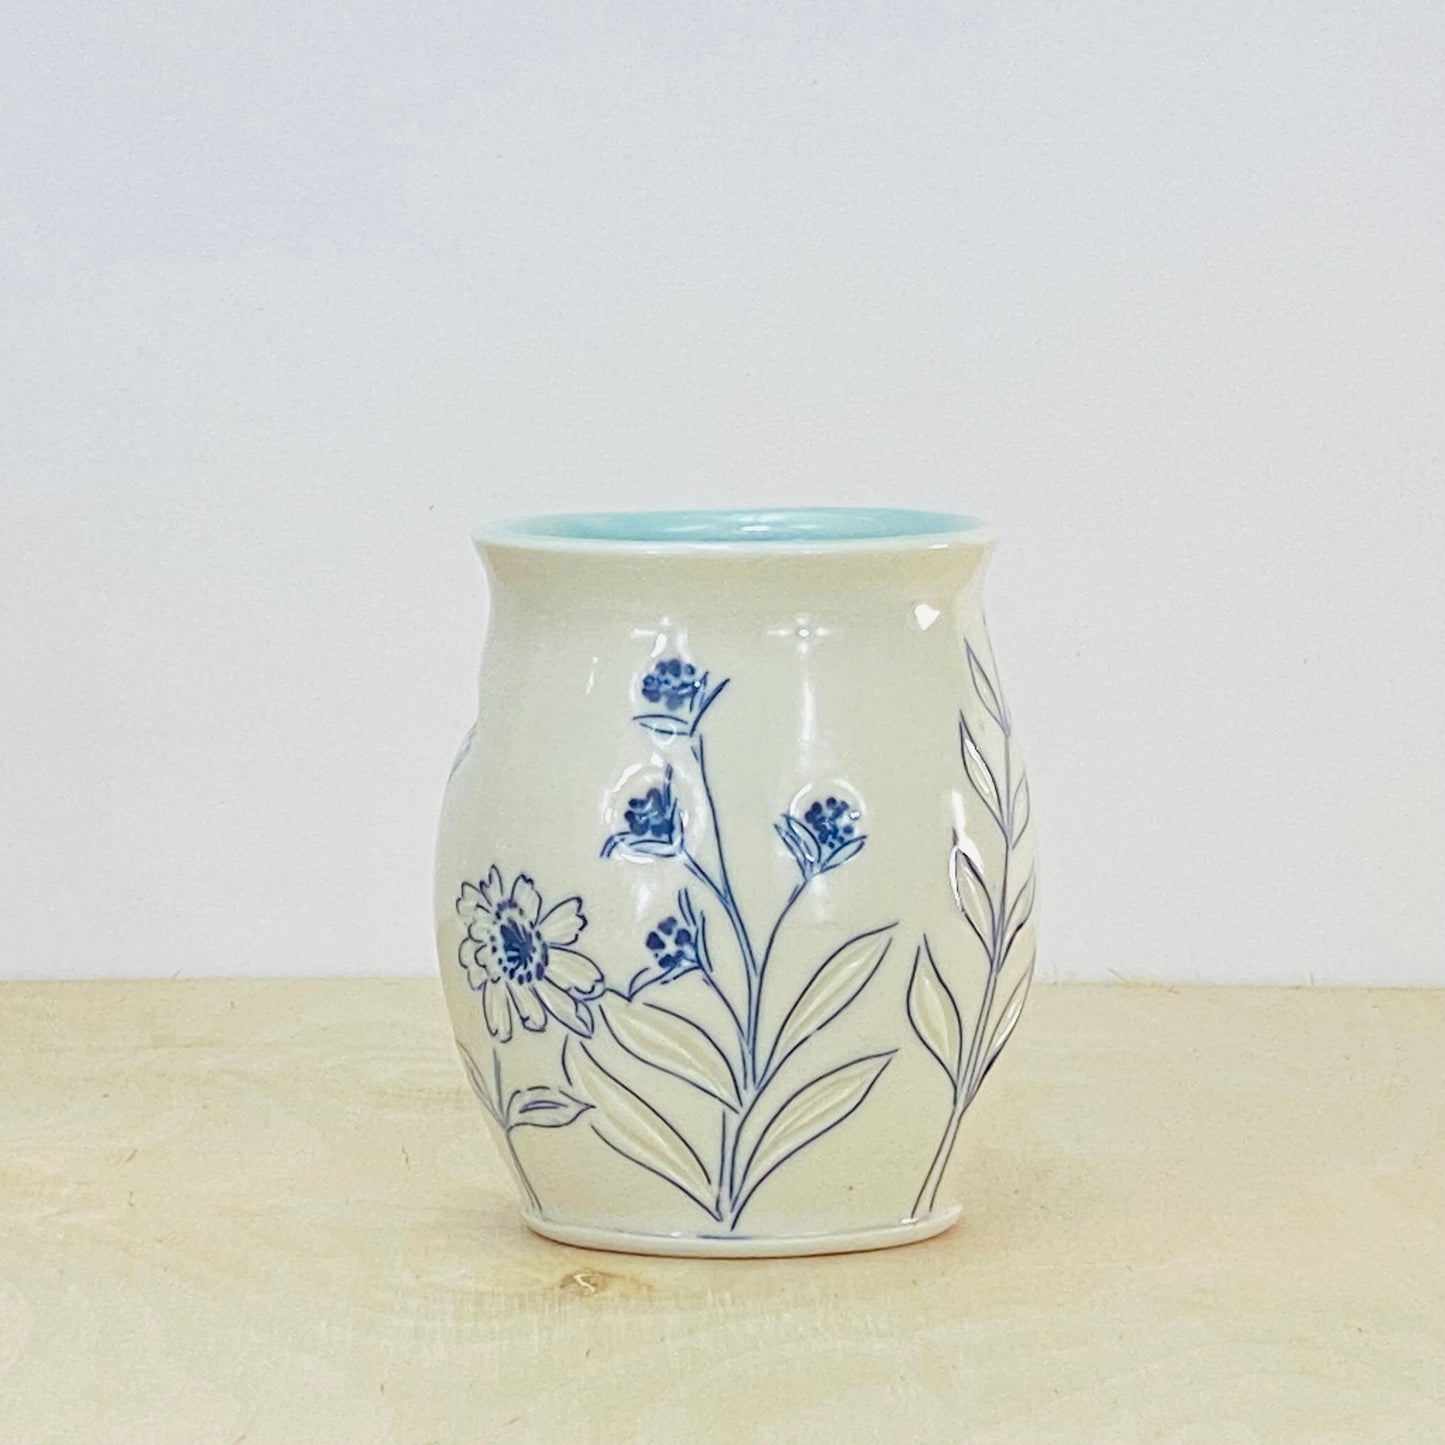 Mug with Flowers4-BES/ironweed